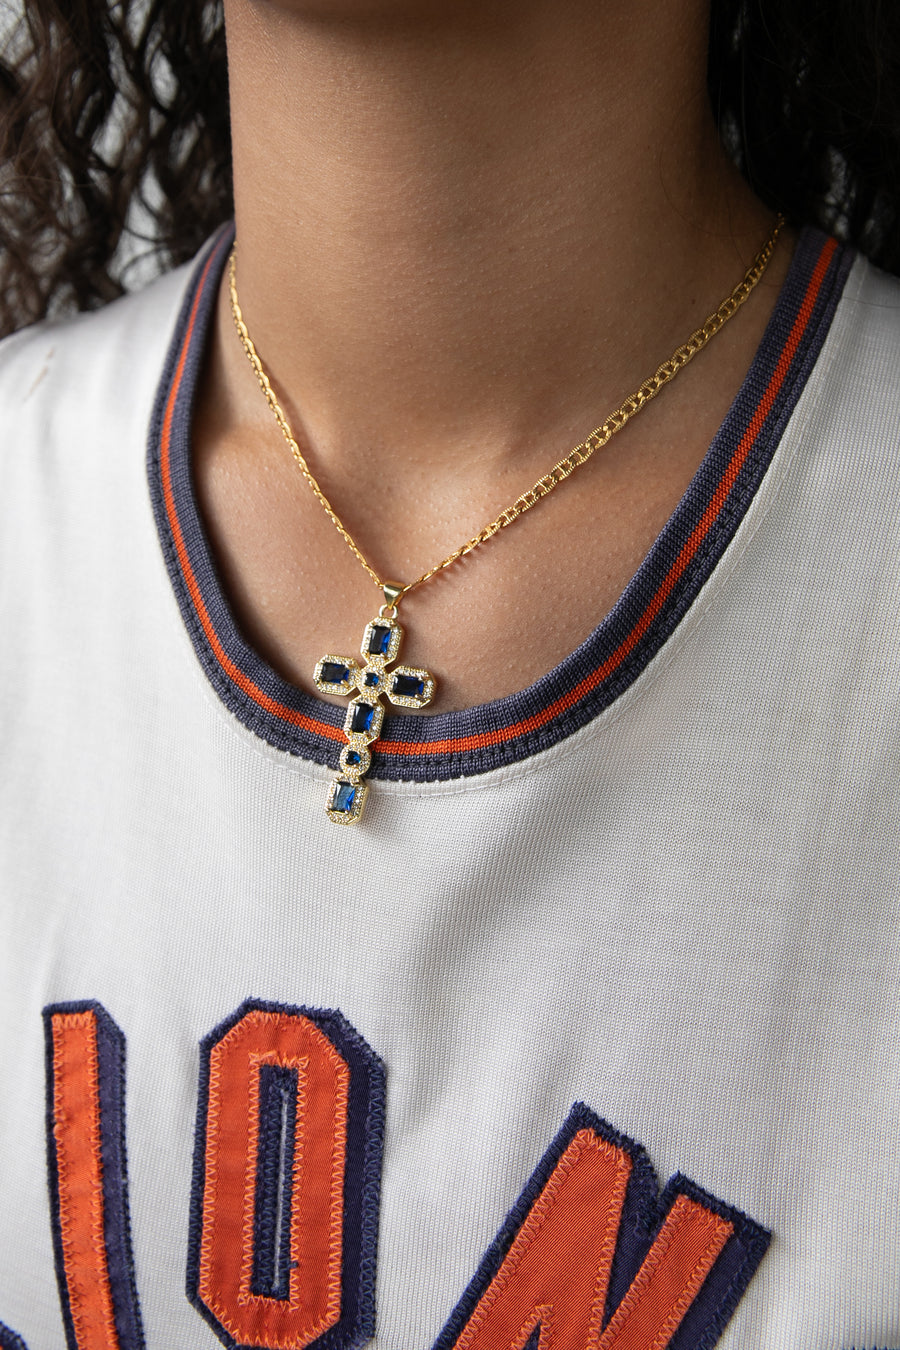 Ornate Cross Necklace